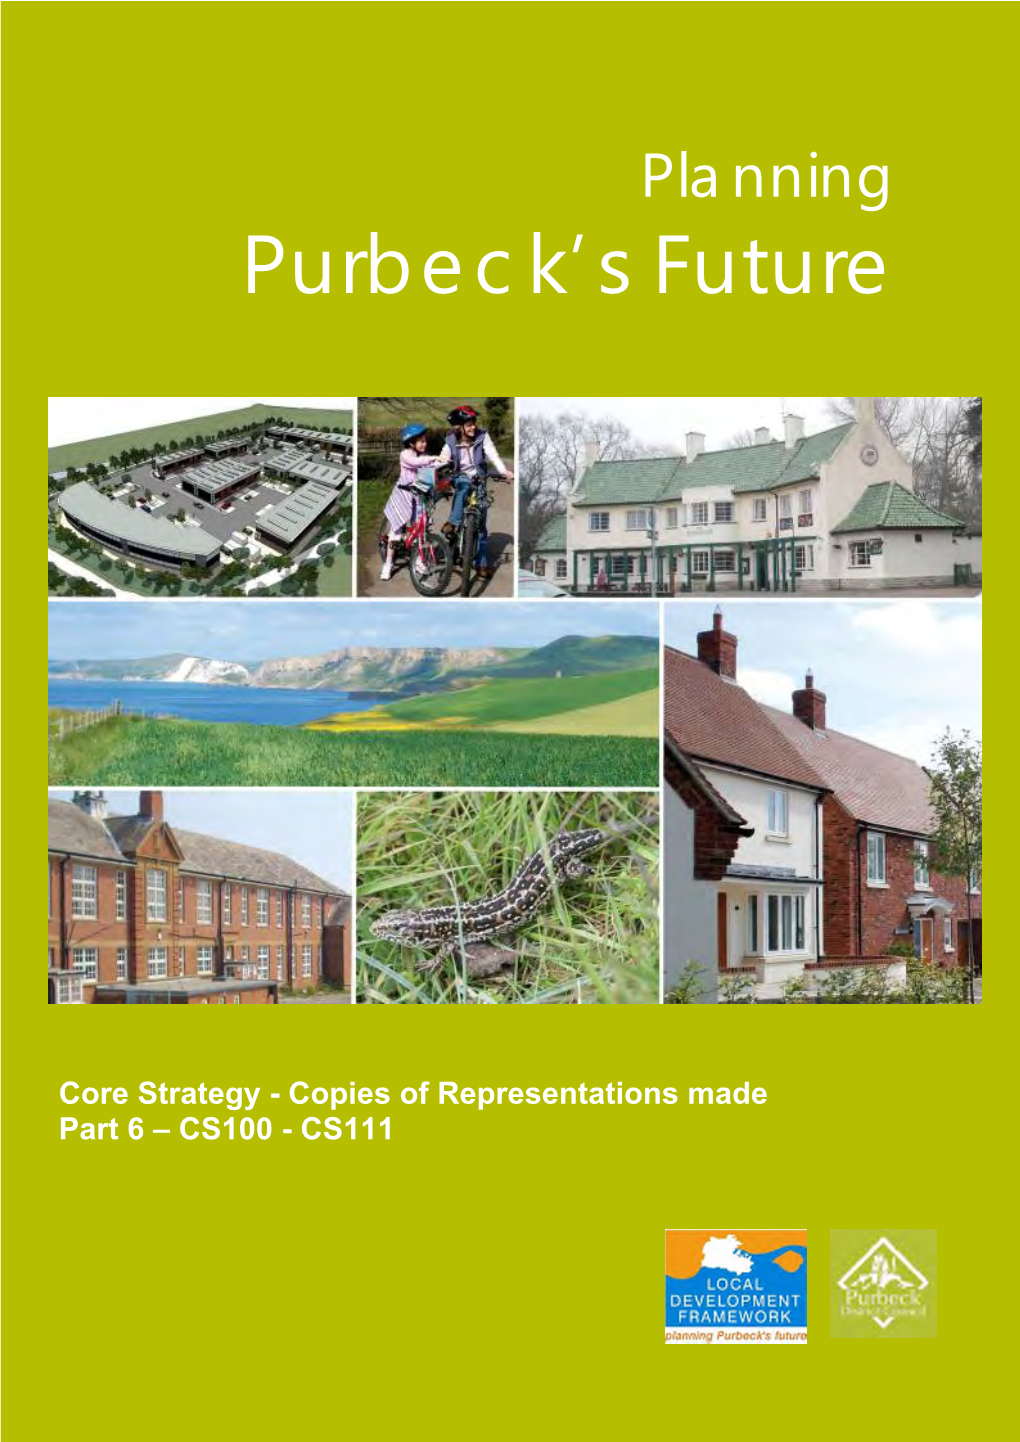 Purbeck's Future